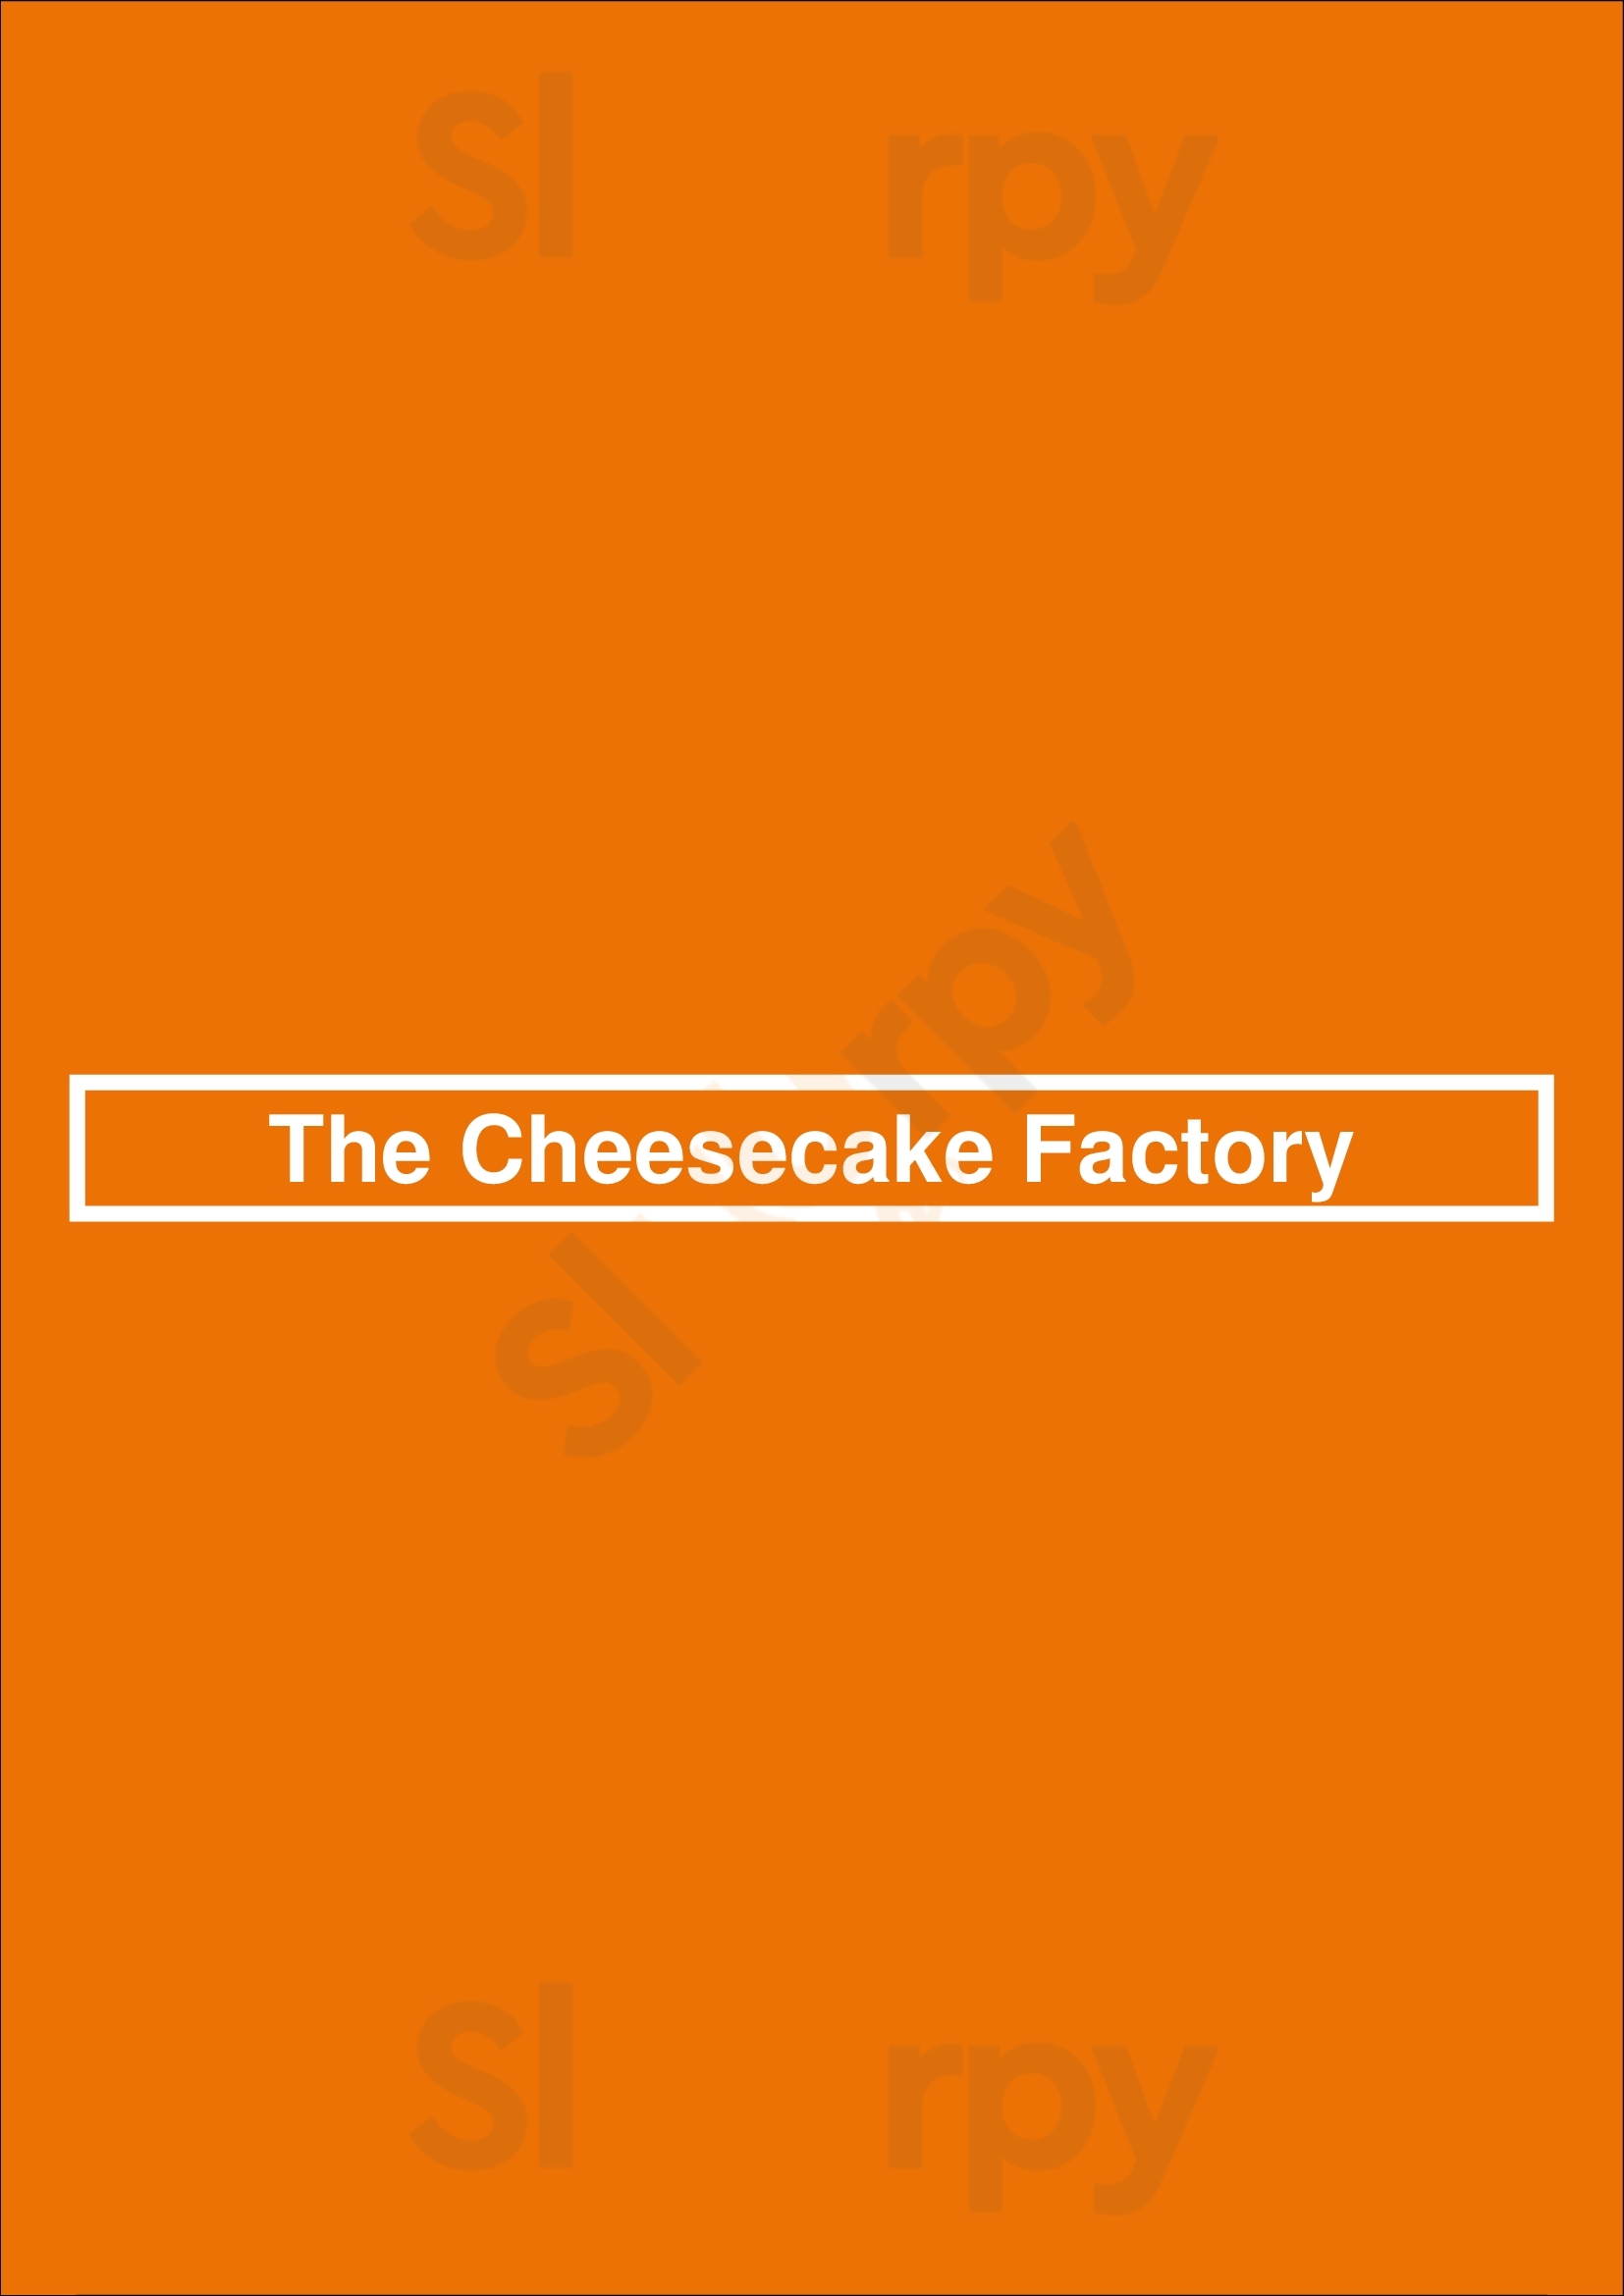 The Cheesecake Factory San Juan Menu - 1